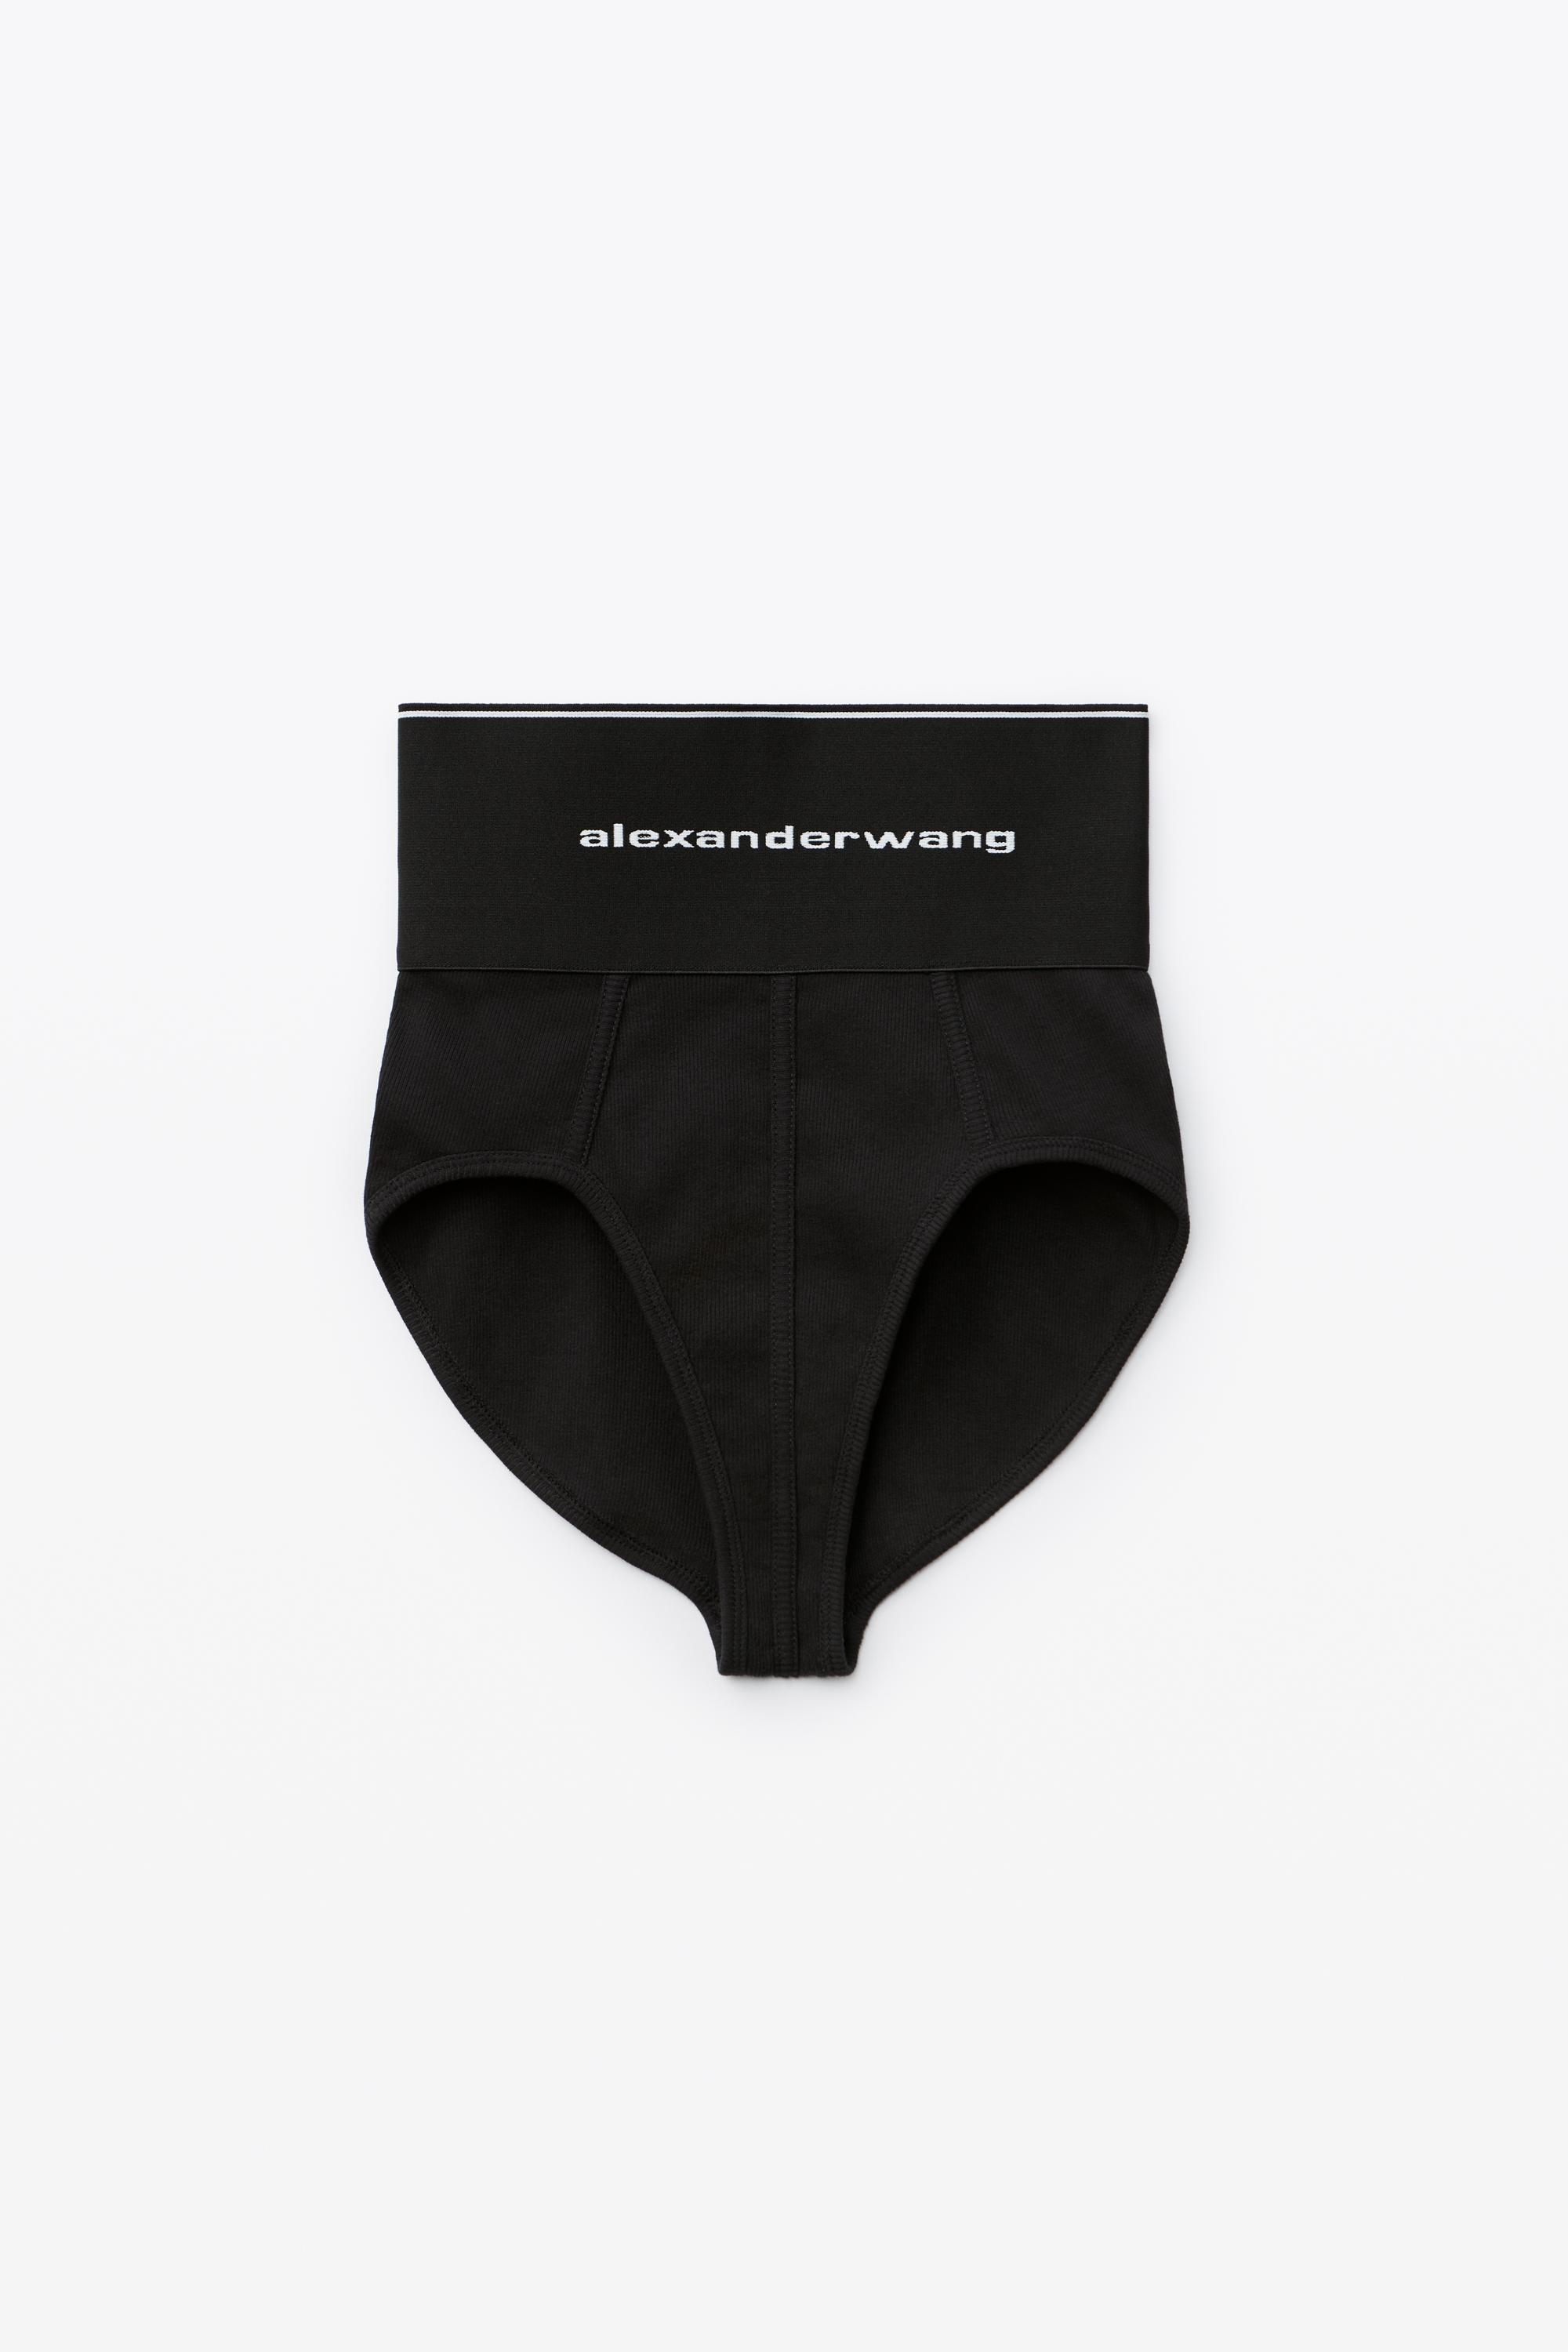 https://cdna.lystit.com/photos/alexanderwang/237a0d20/alexander-wang-BLACK-Logo-Elastic-Underwear.jpeg